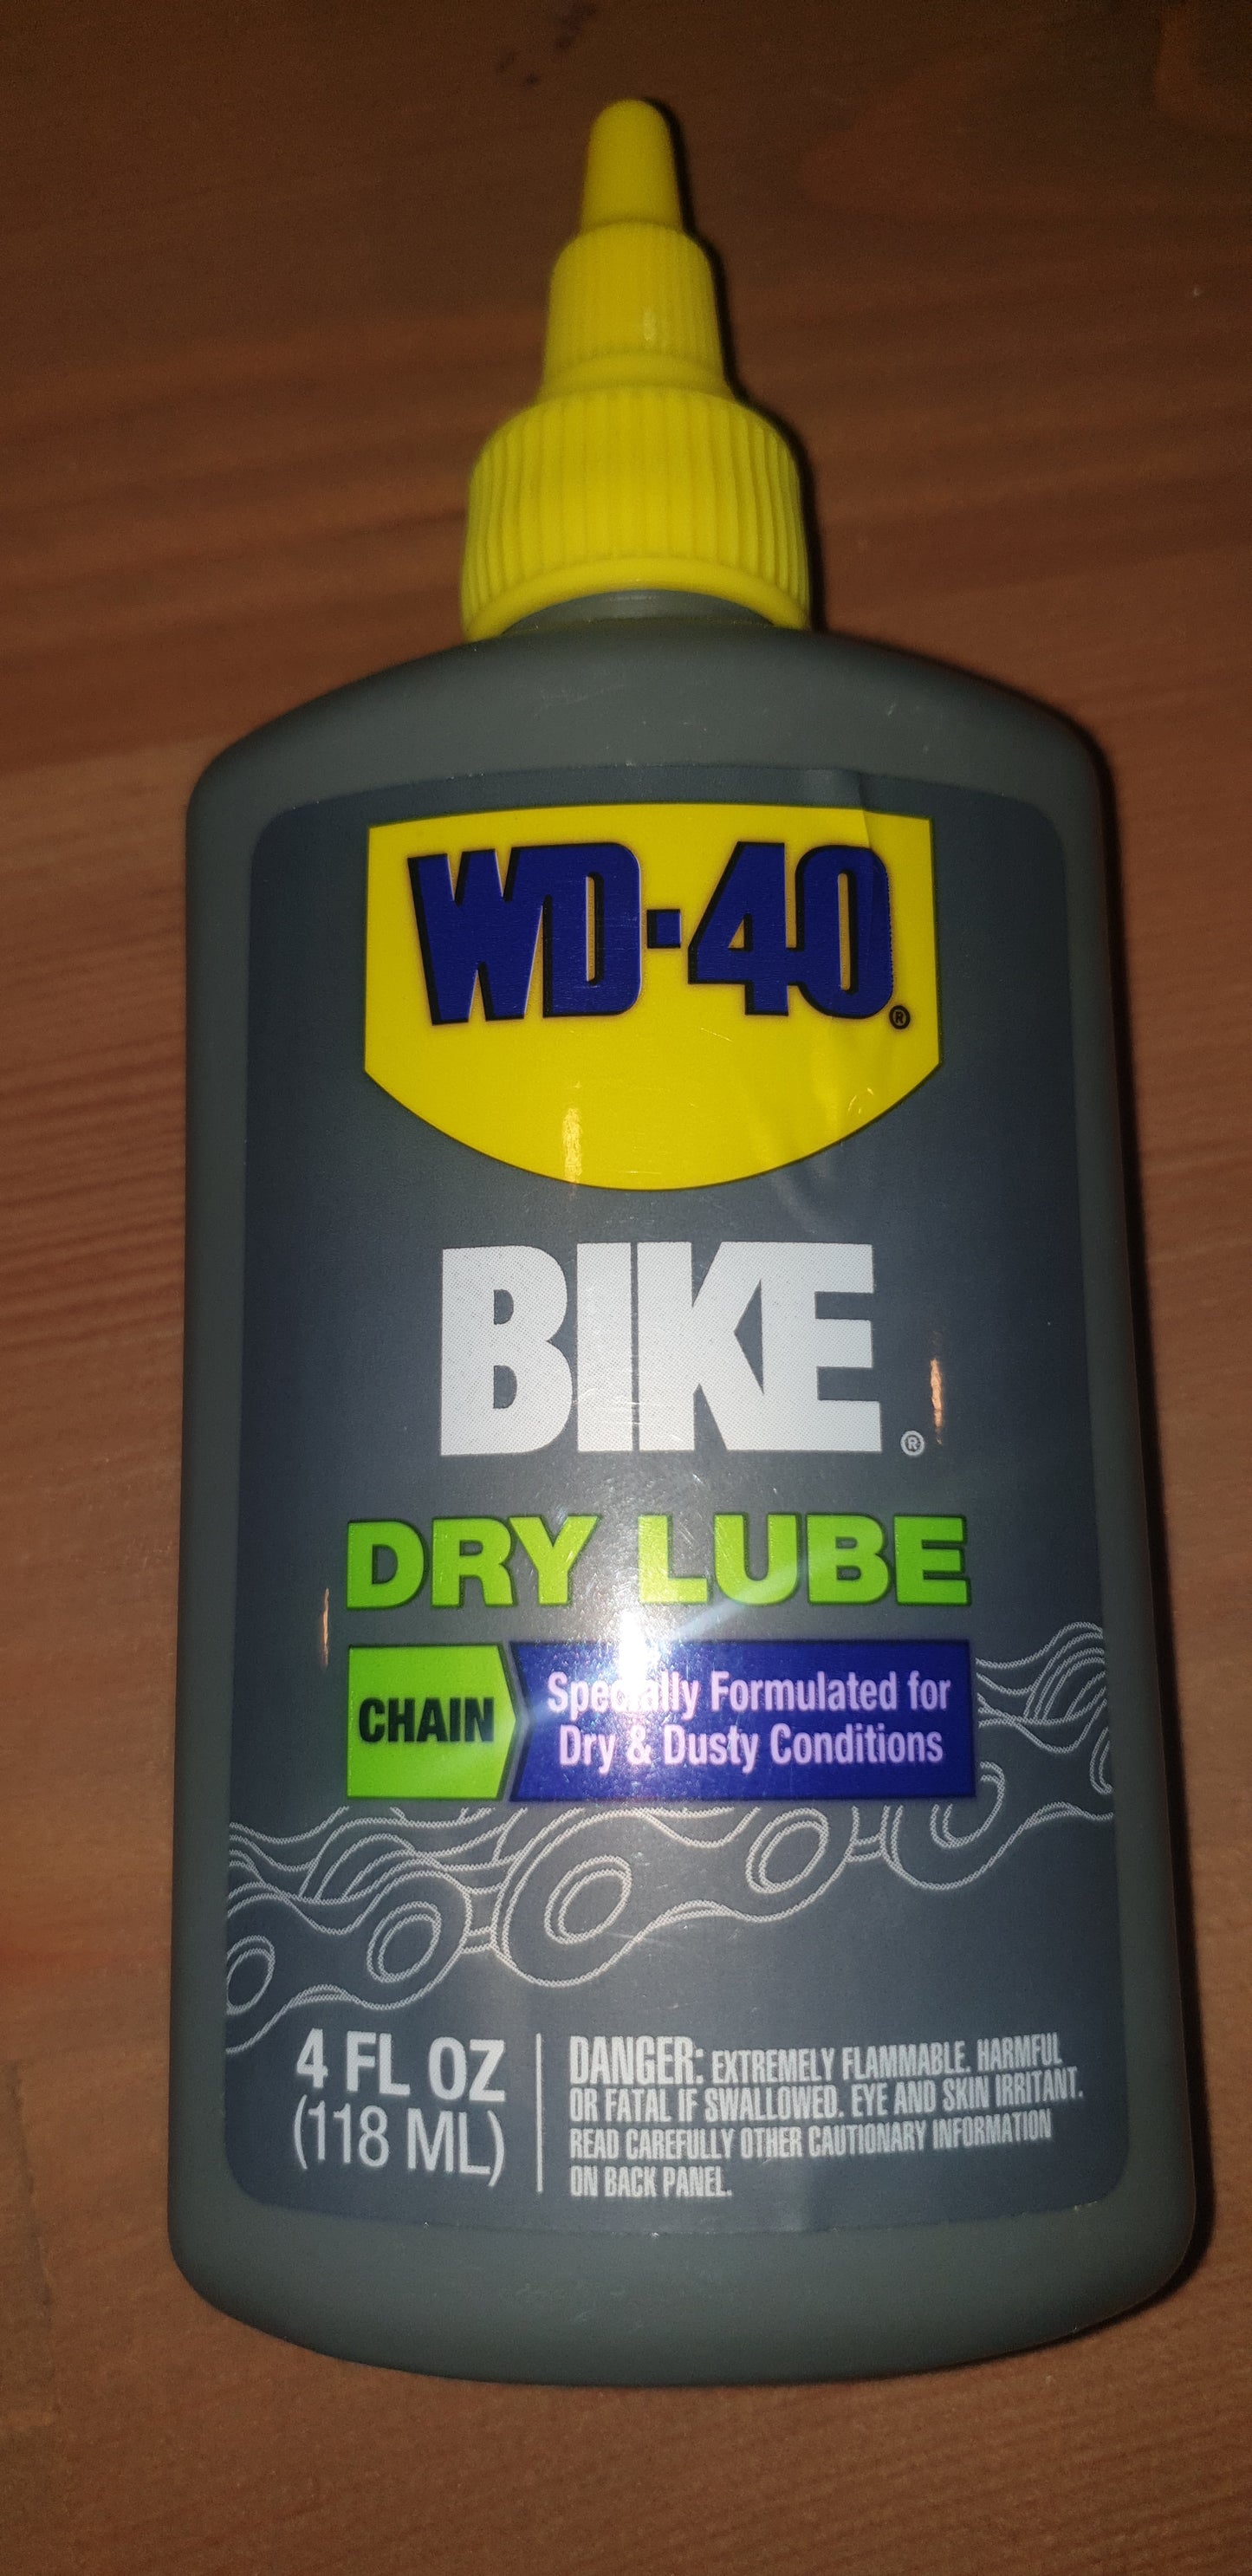 WD-40 Dry Lube 4 FL OZ (118 ML)